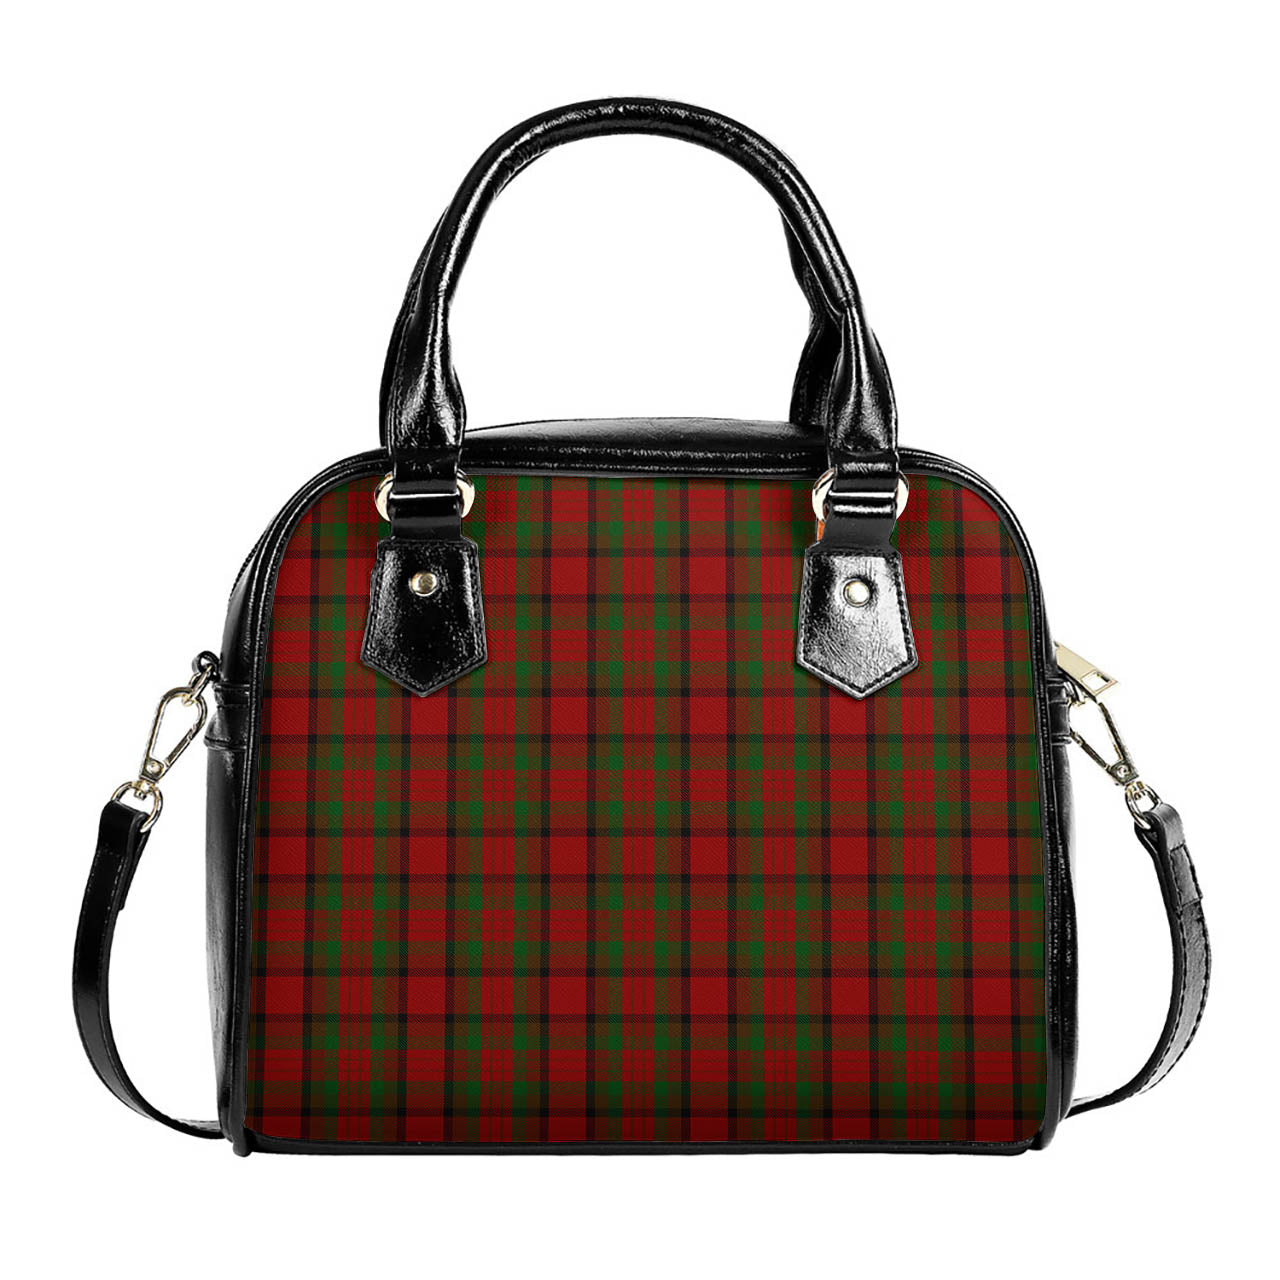 Tipperary County Ireland Tartan Shoulder Handbags One Size 6*25*22 cm - Tartanvibesclothing